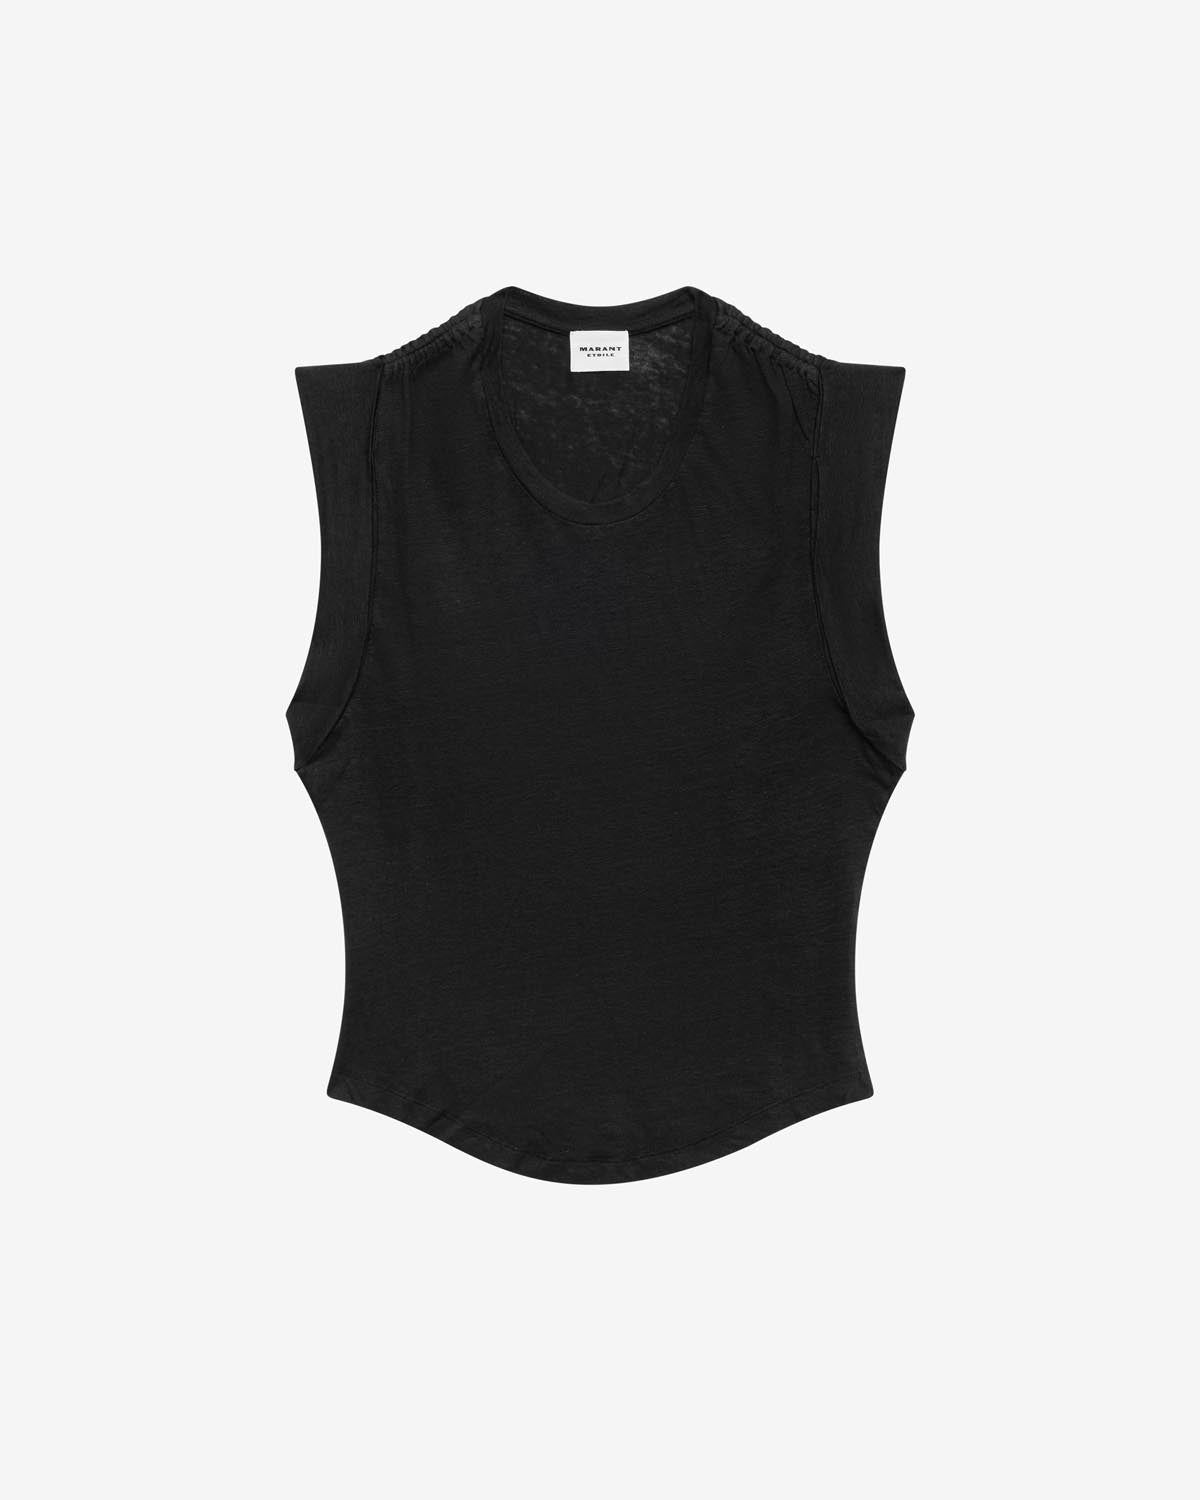 Kotty tee-shirt Woman Black 1